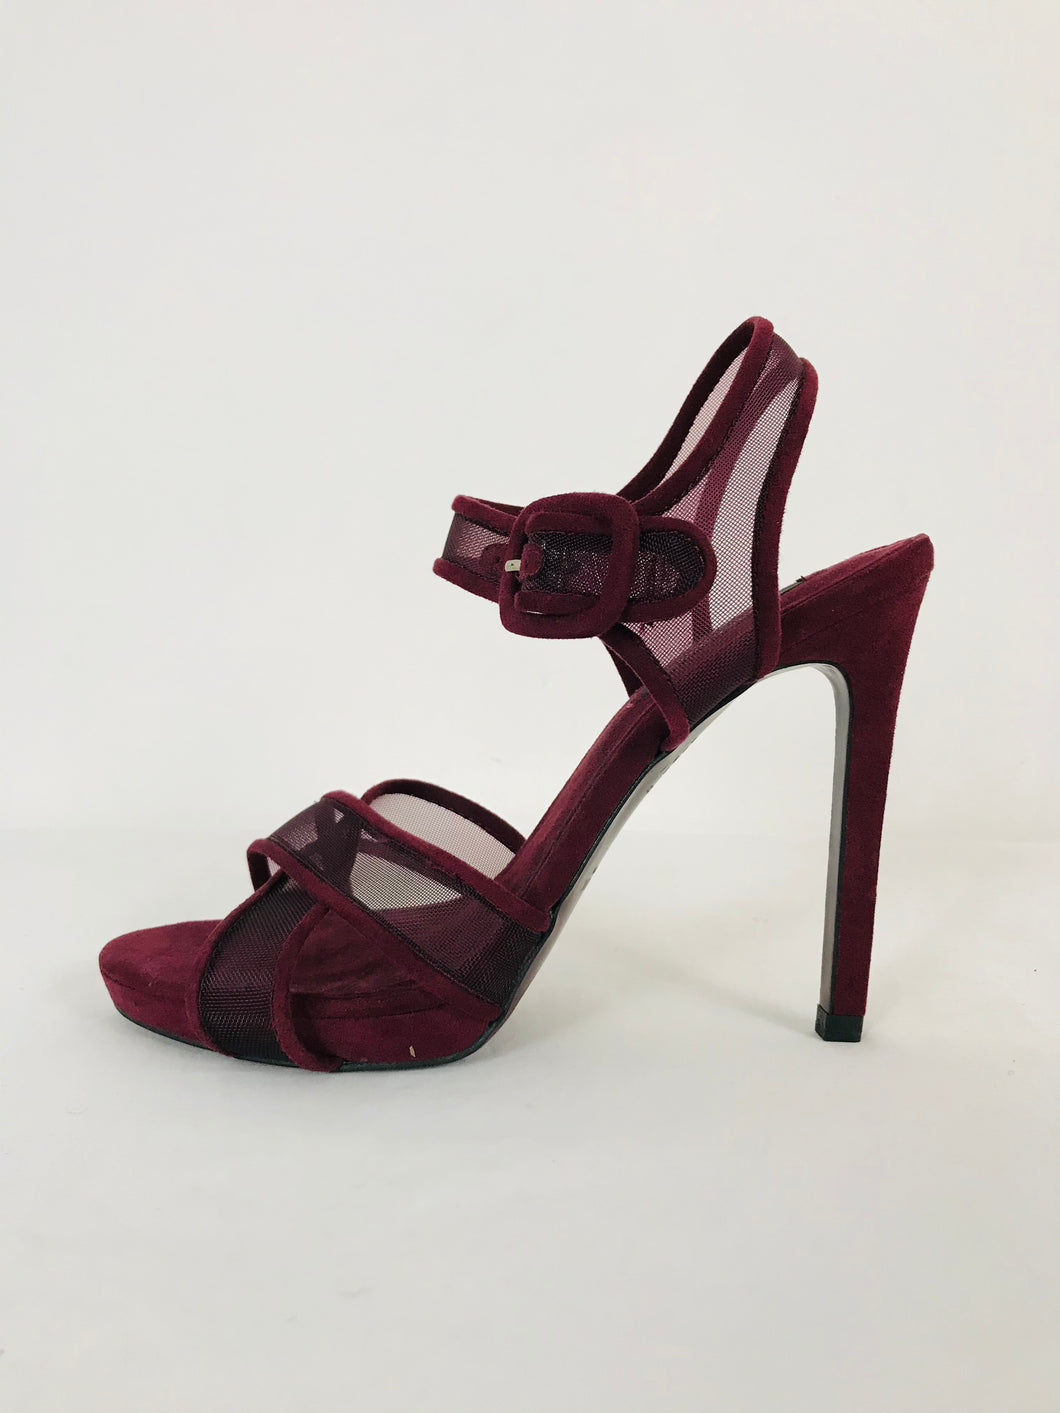 Zara Women’s Mesh Strap Sandal Heels | 38 UK5 | Burgundy Red